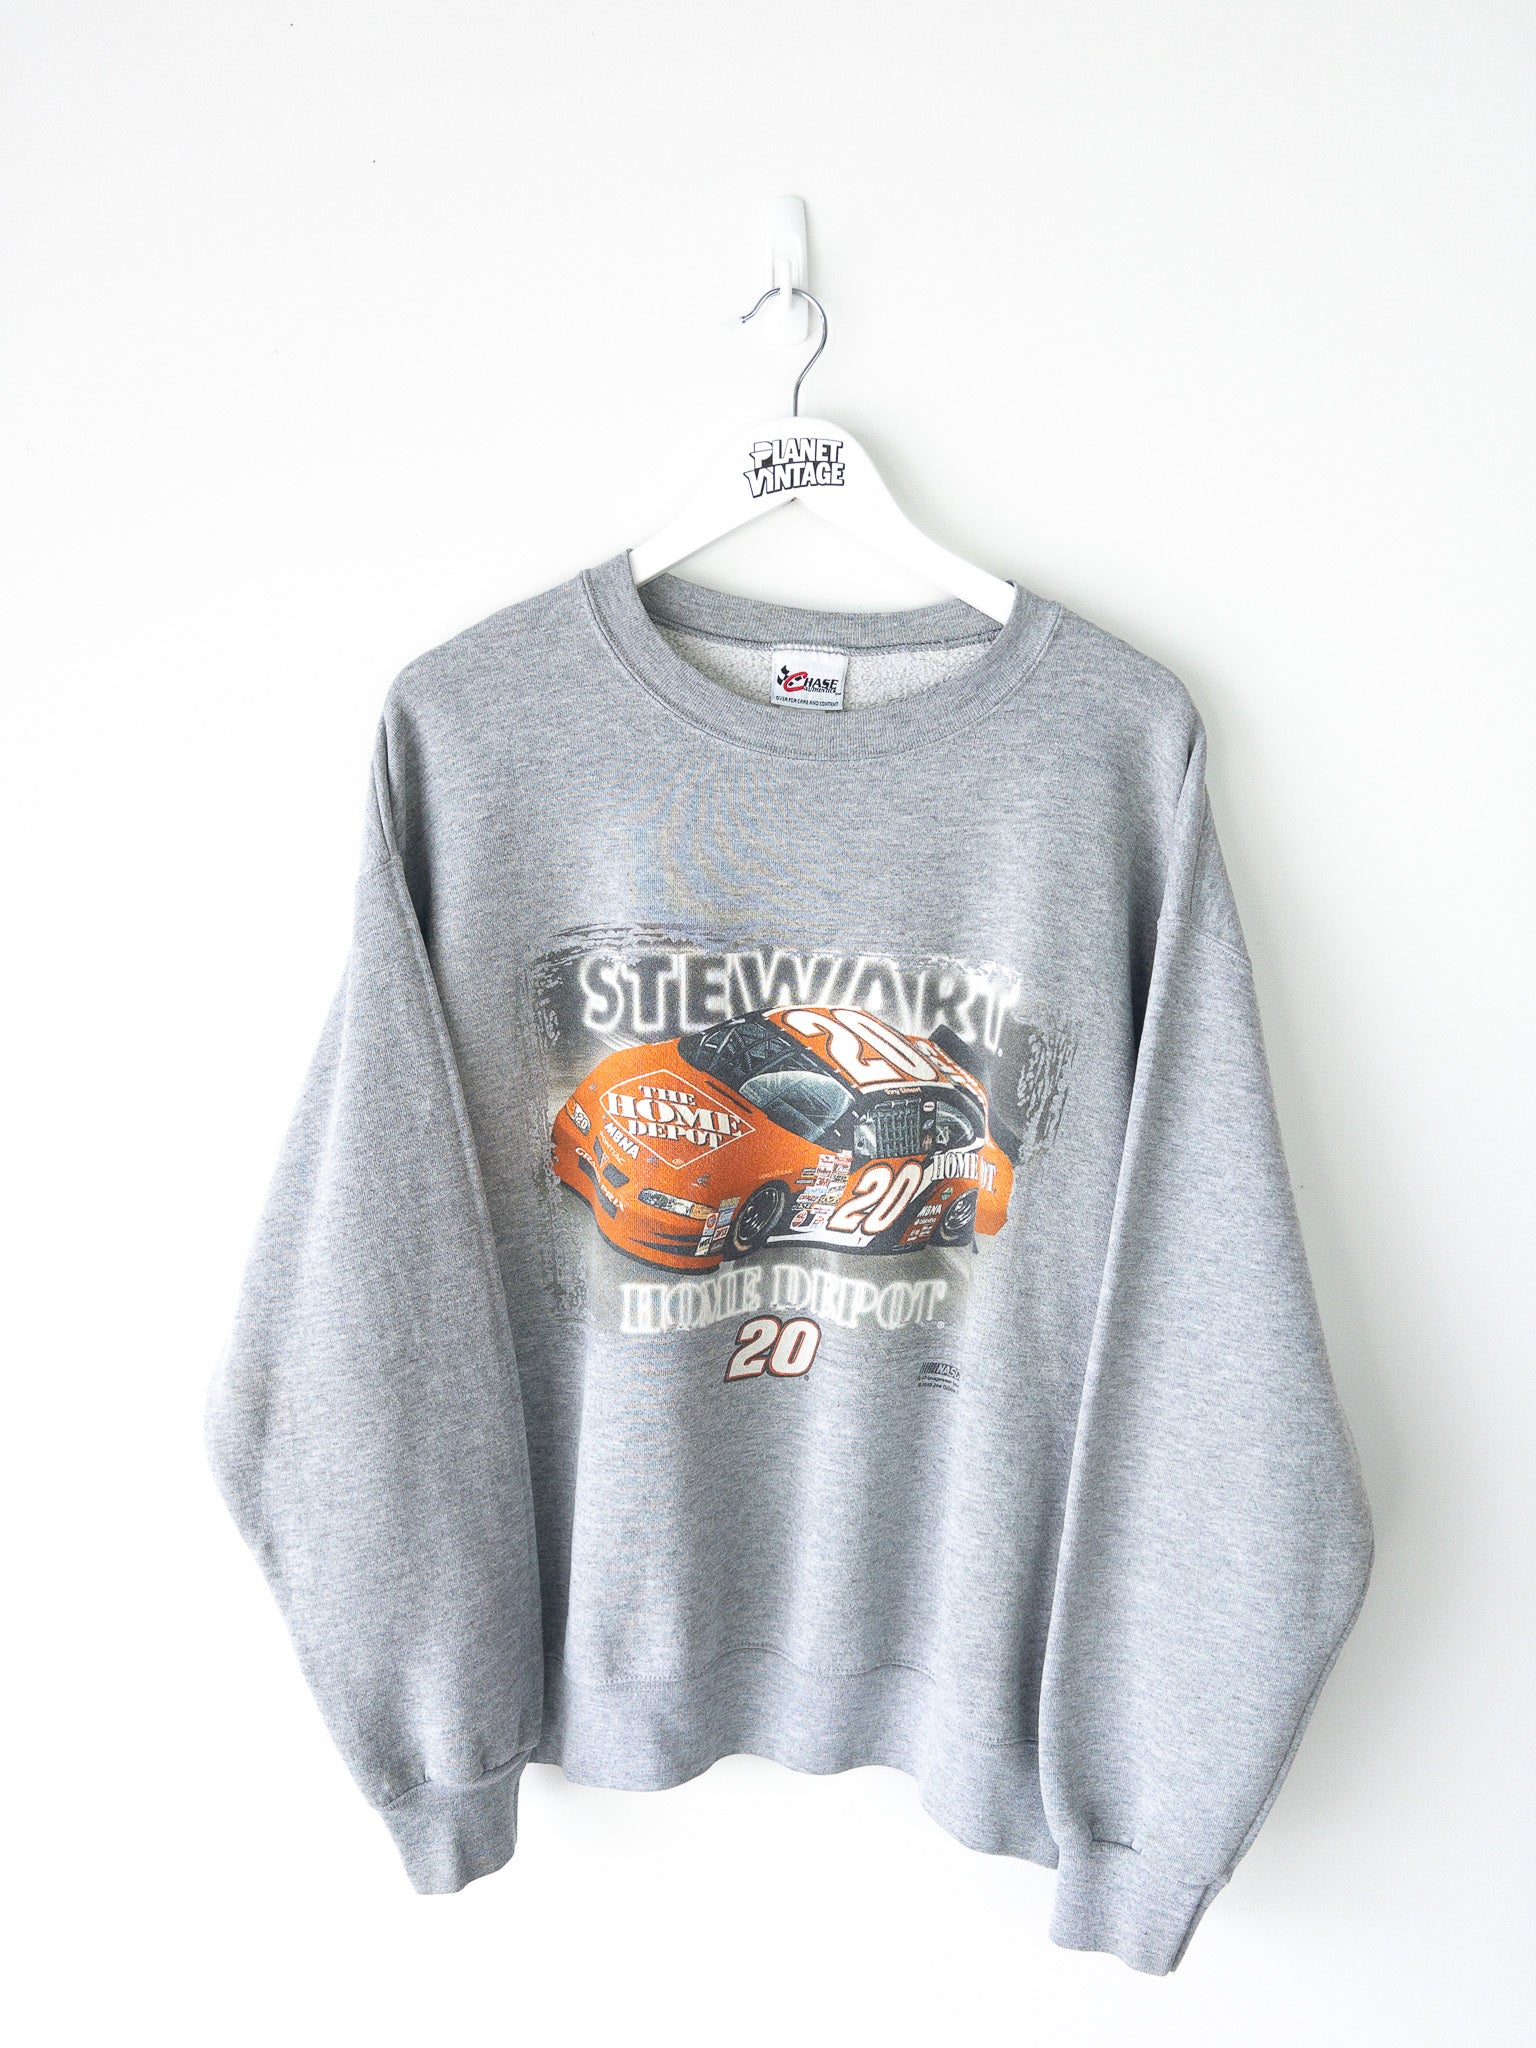 Vintage Tony Stewart 2002 Nascar Sweatshirt (L)